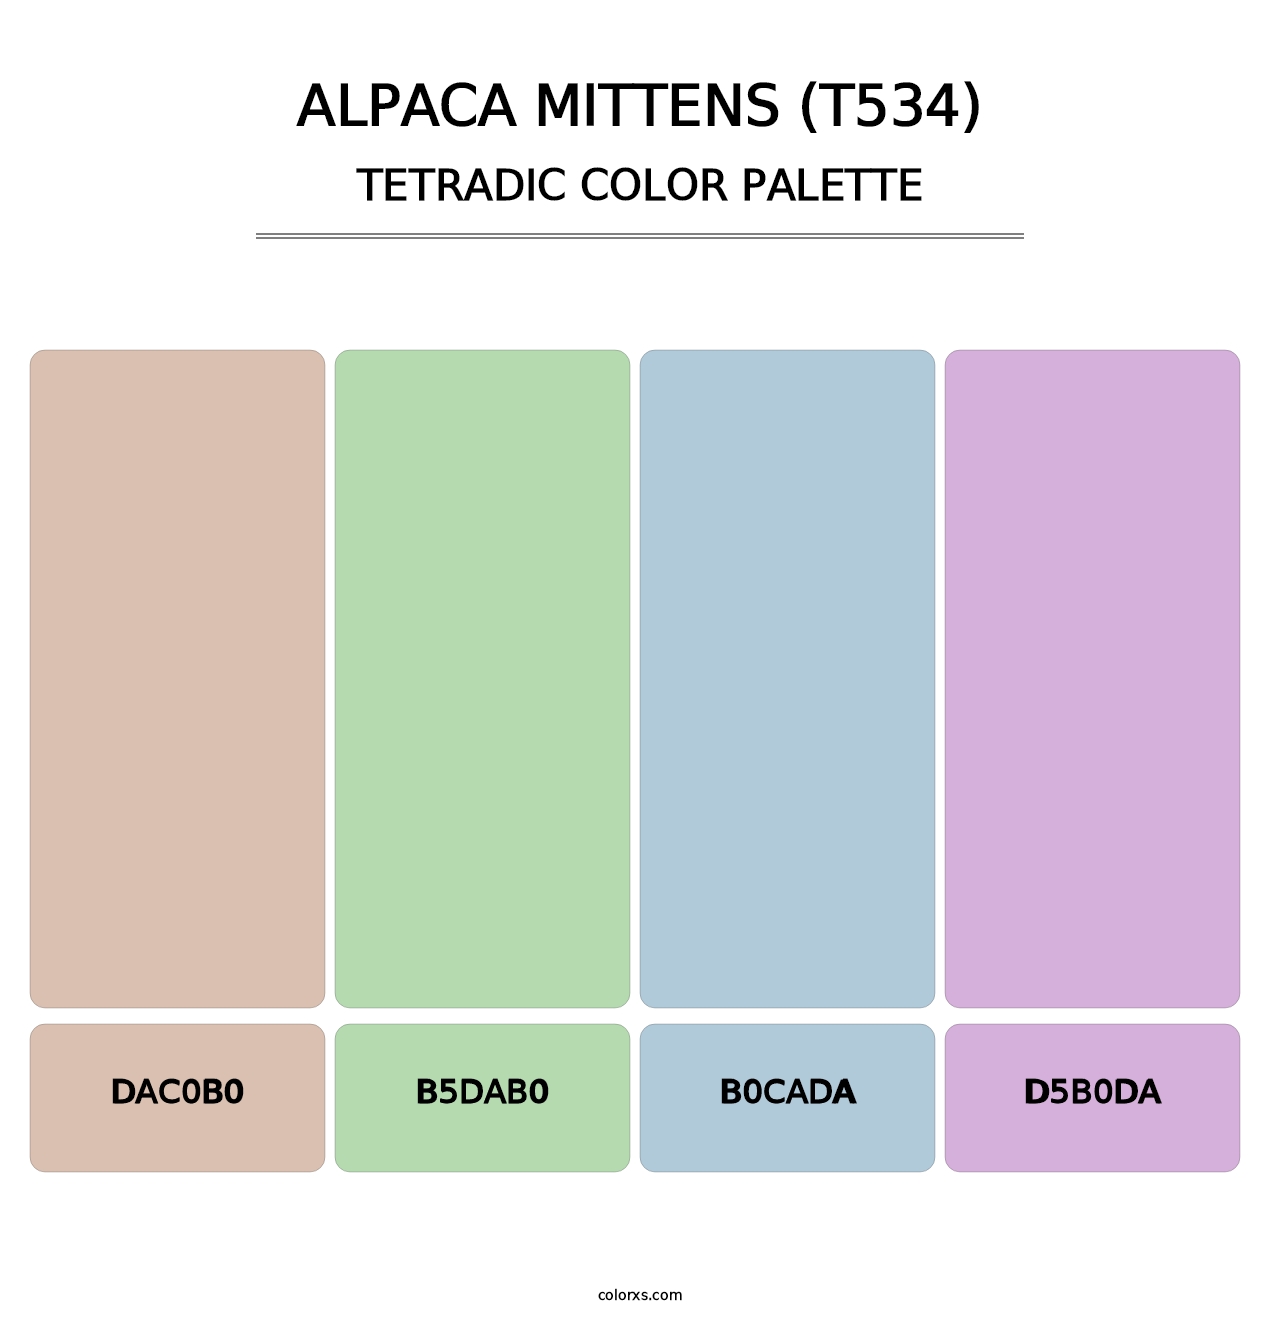 Alpaca Mittens (T534) - Tetradic Color Palette